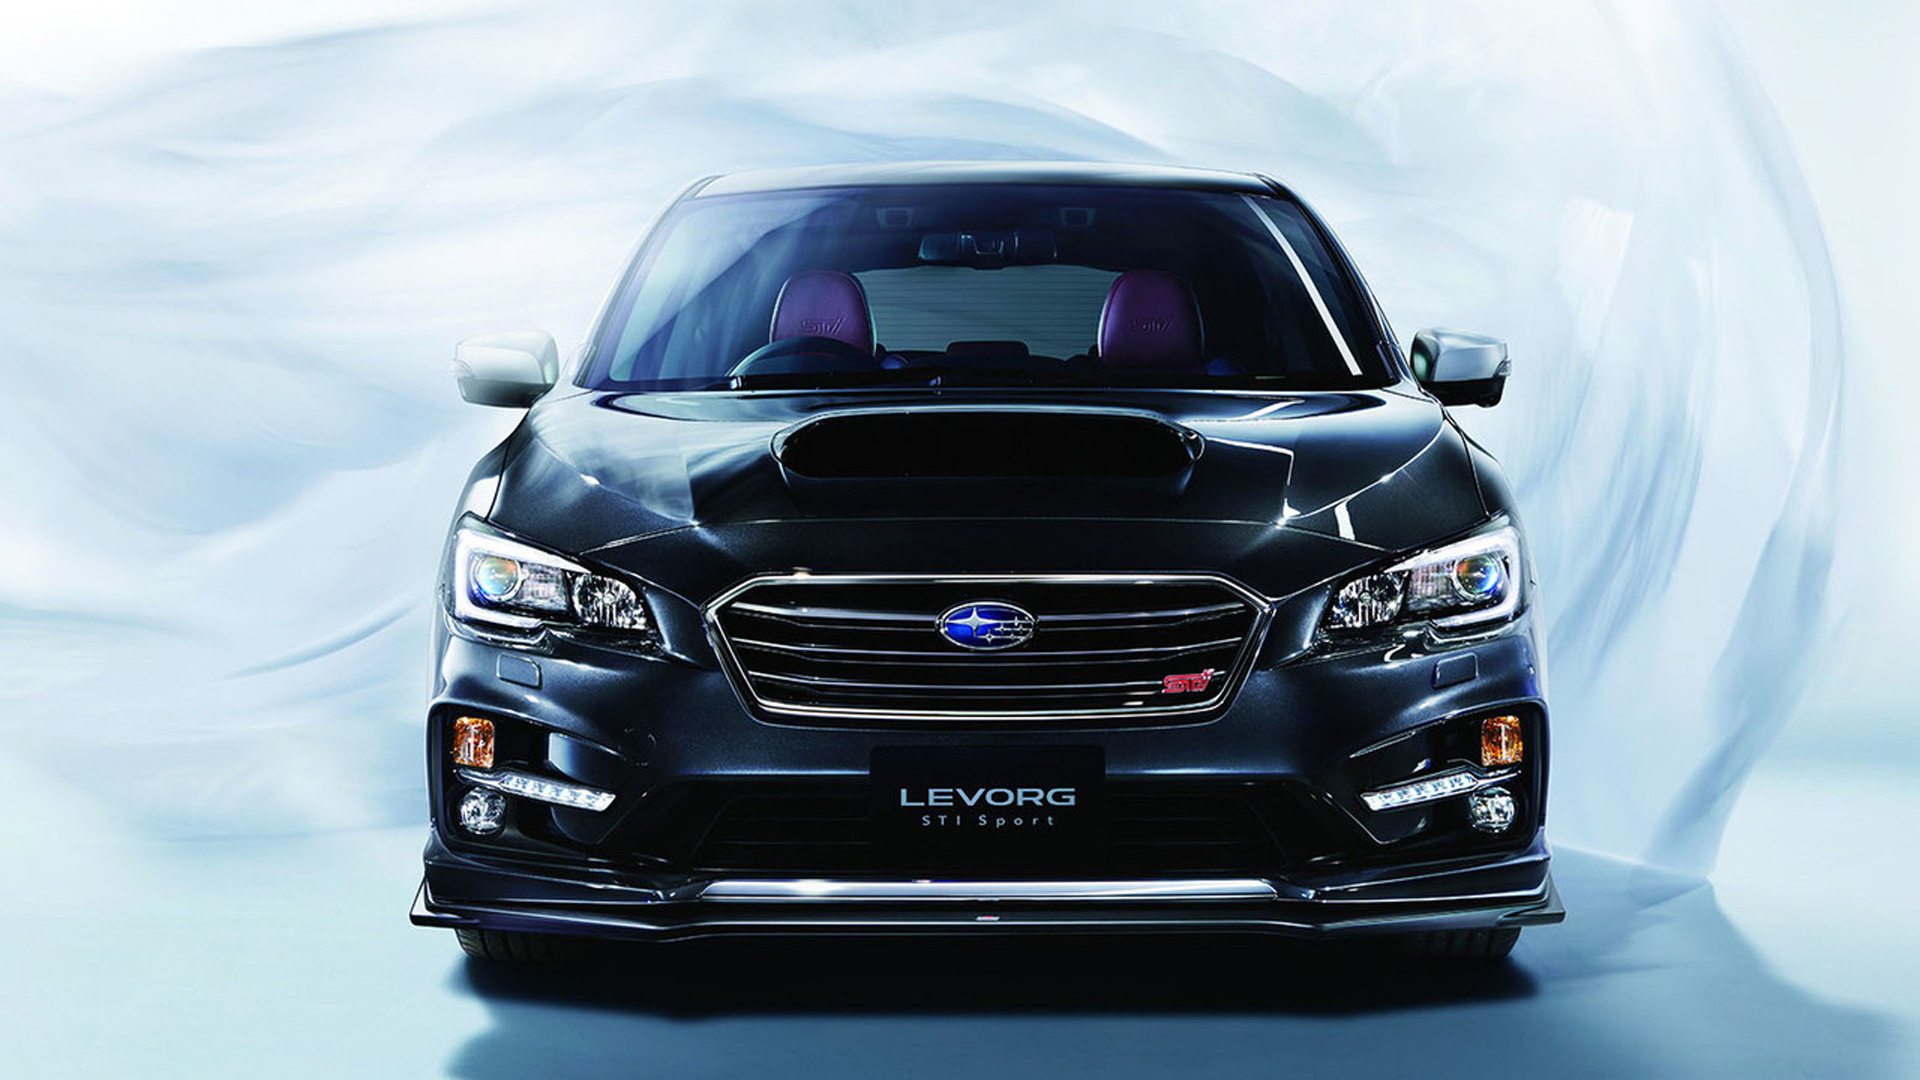 2016 Subaru Levorg STI Sport